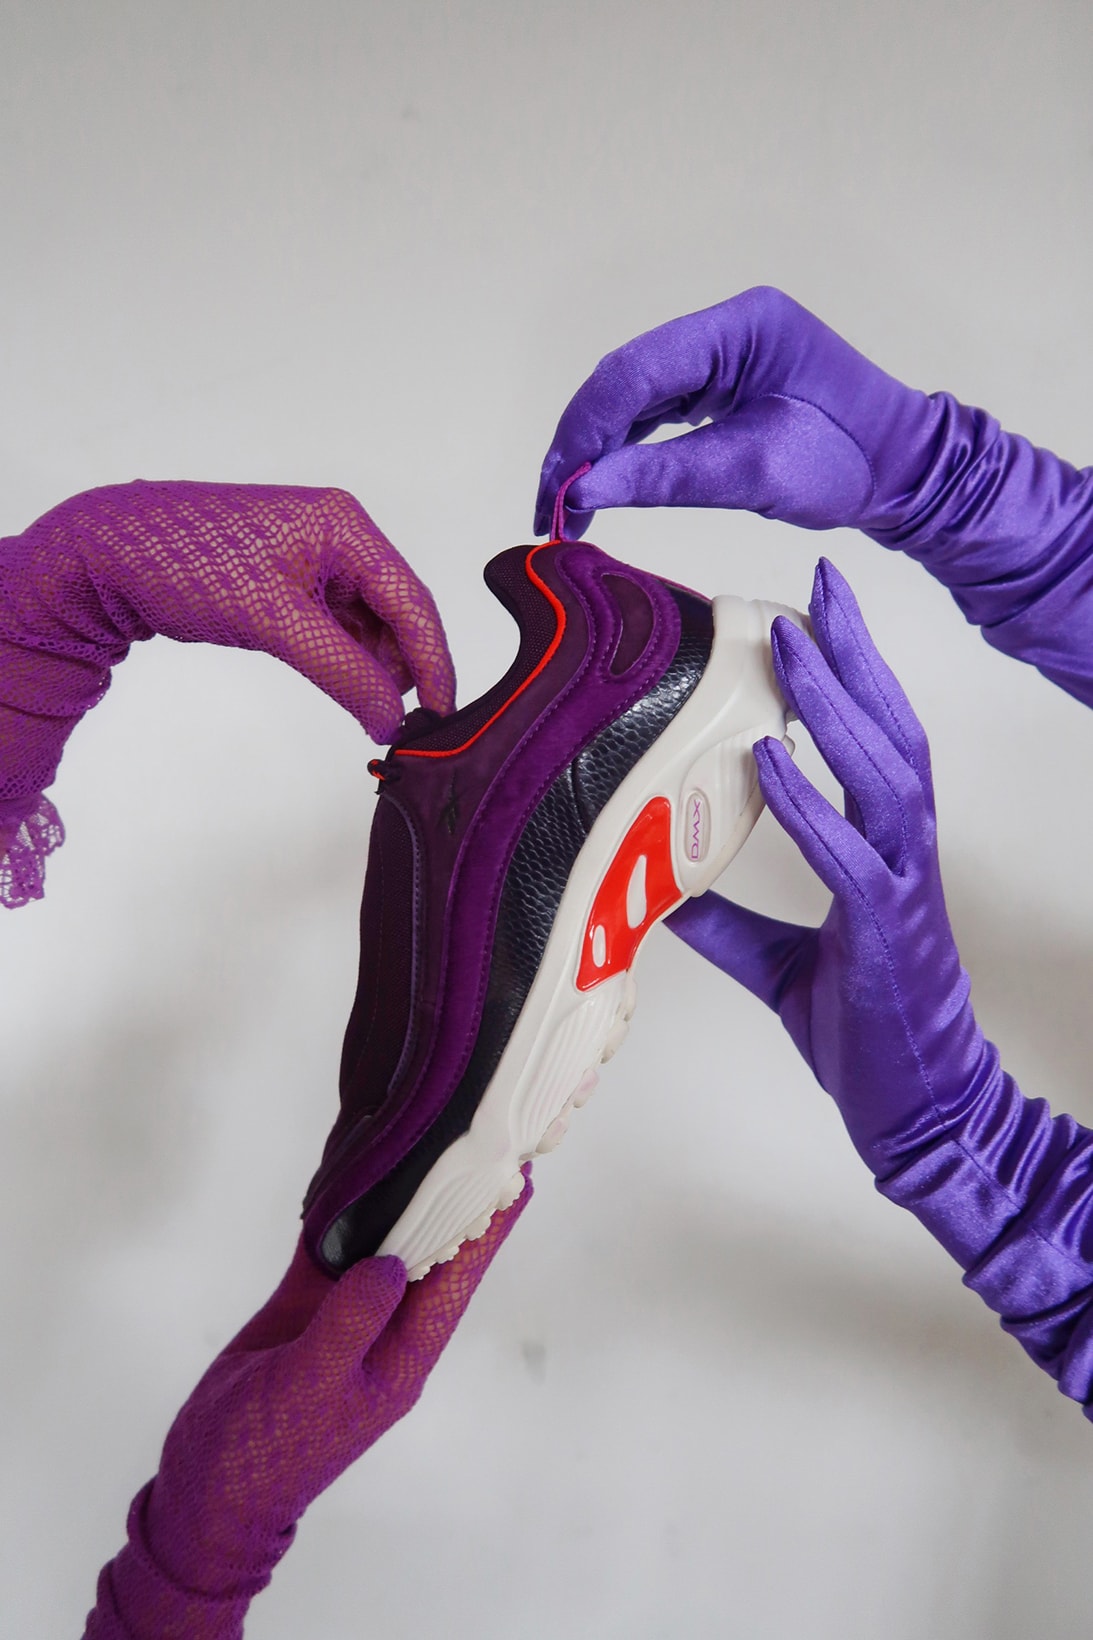 reebok sanne poeze girl on kicks collaboration daytona dmx sneakers its a mans world campaign purple 